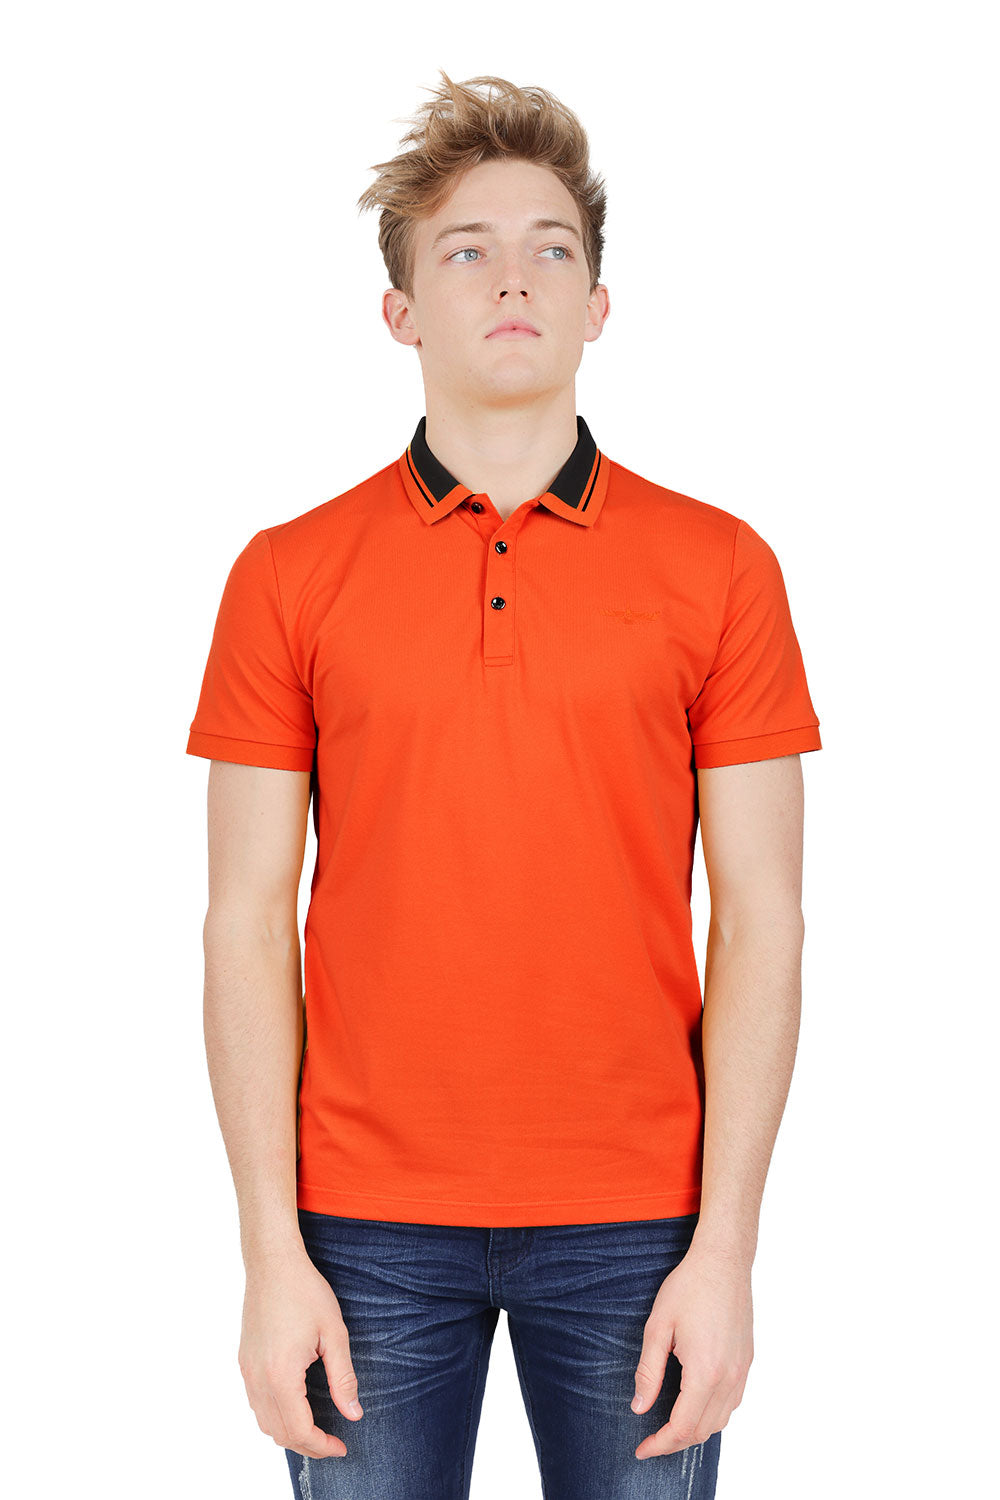 Barabas Men's Solid Color Luxury Short Sleeves Polo Shirts PP824 Orange